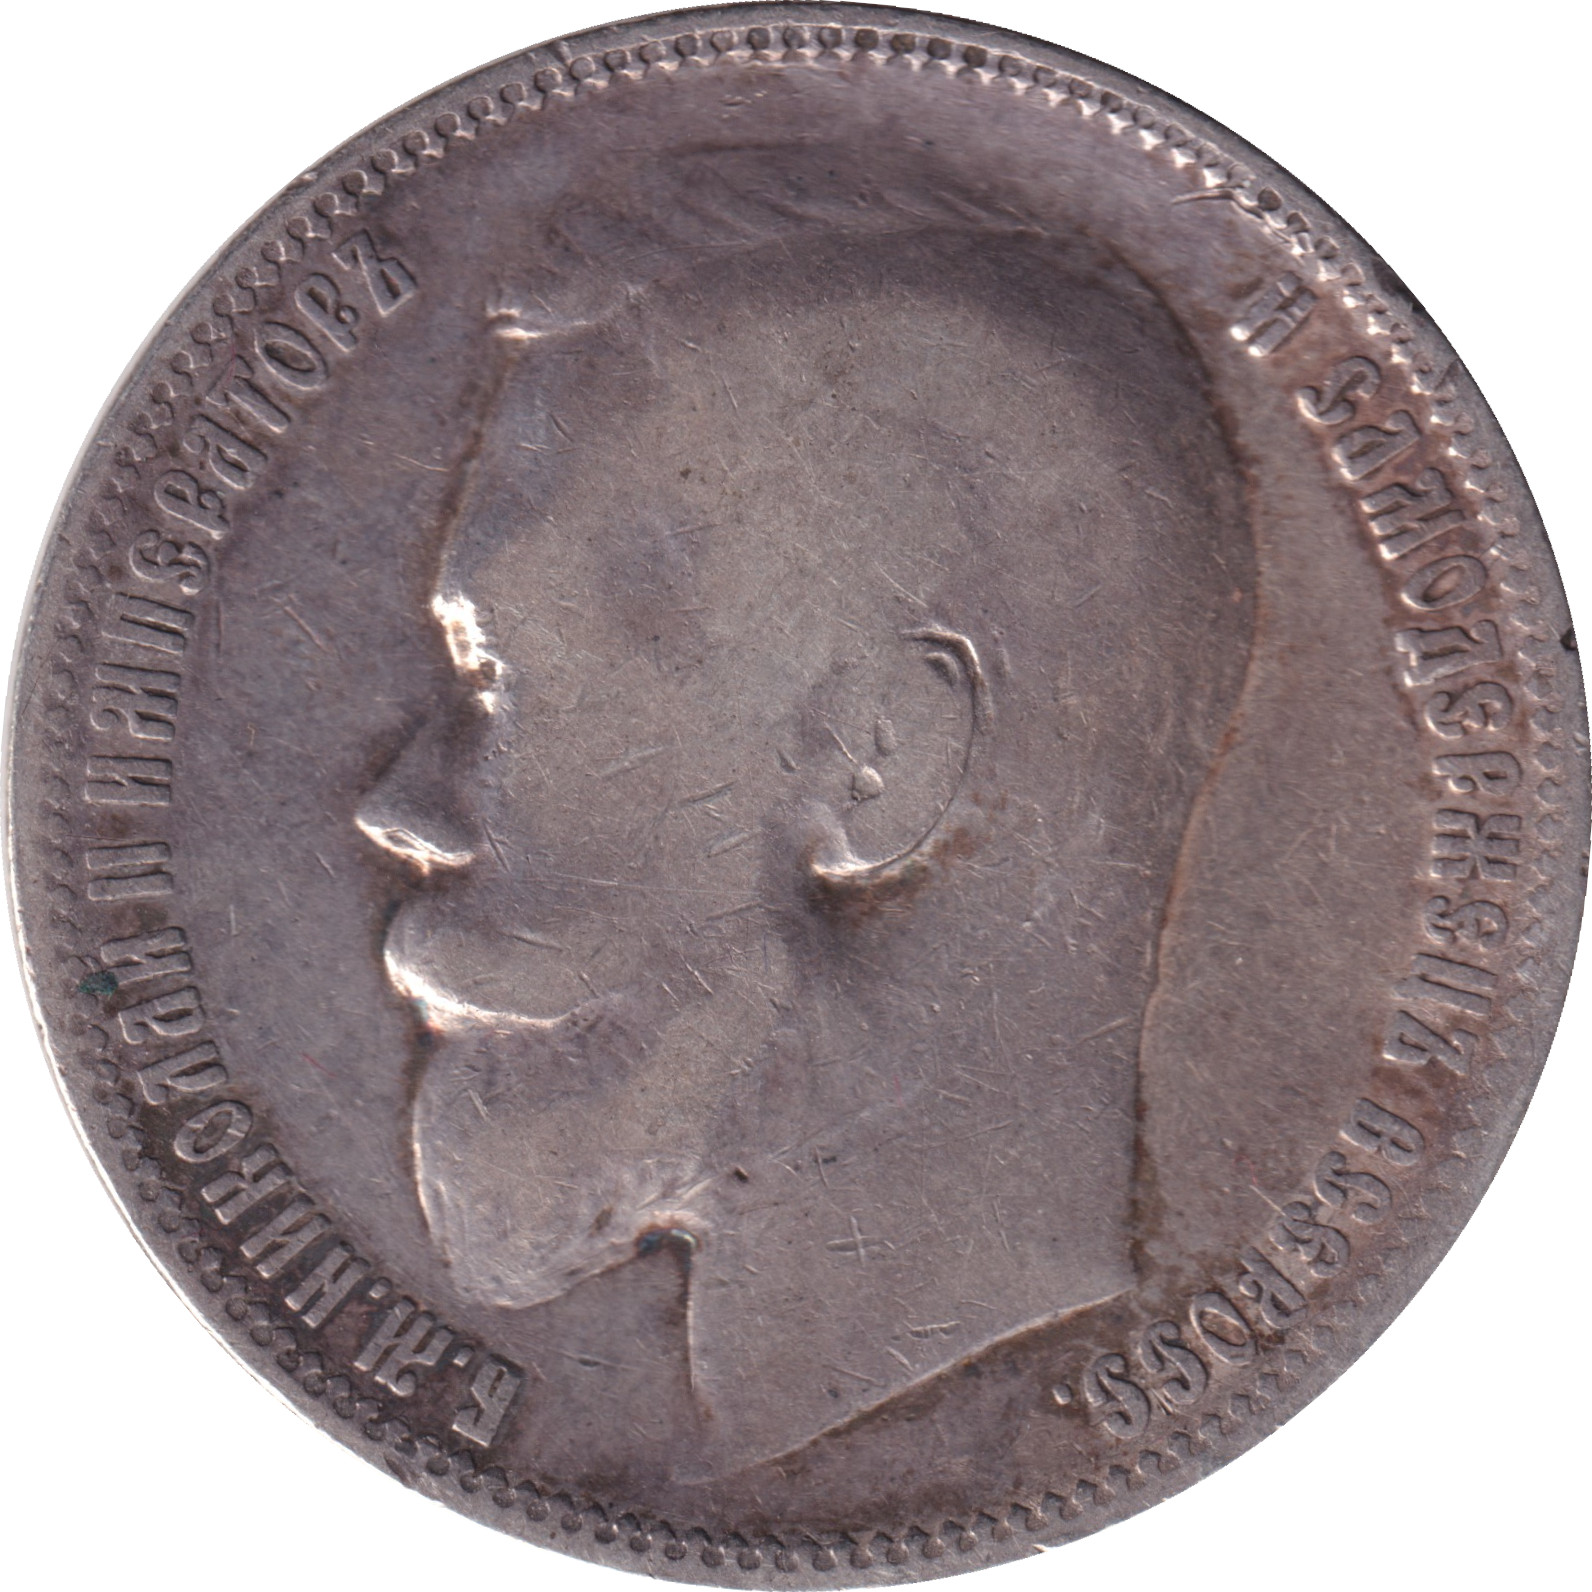 1 ruble - Nicolas II